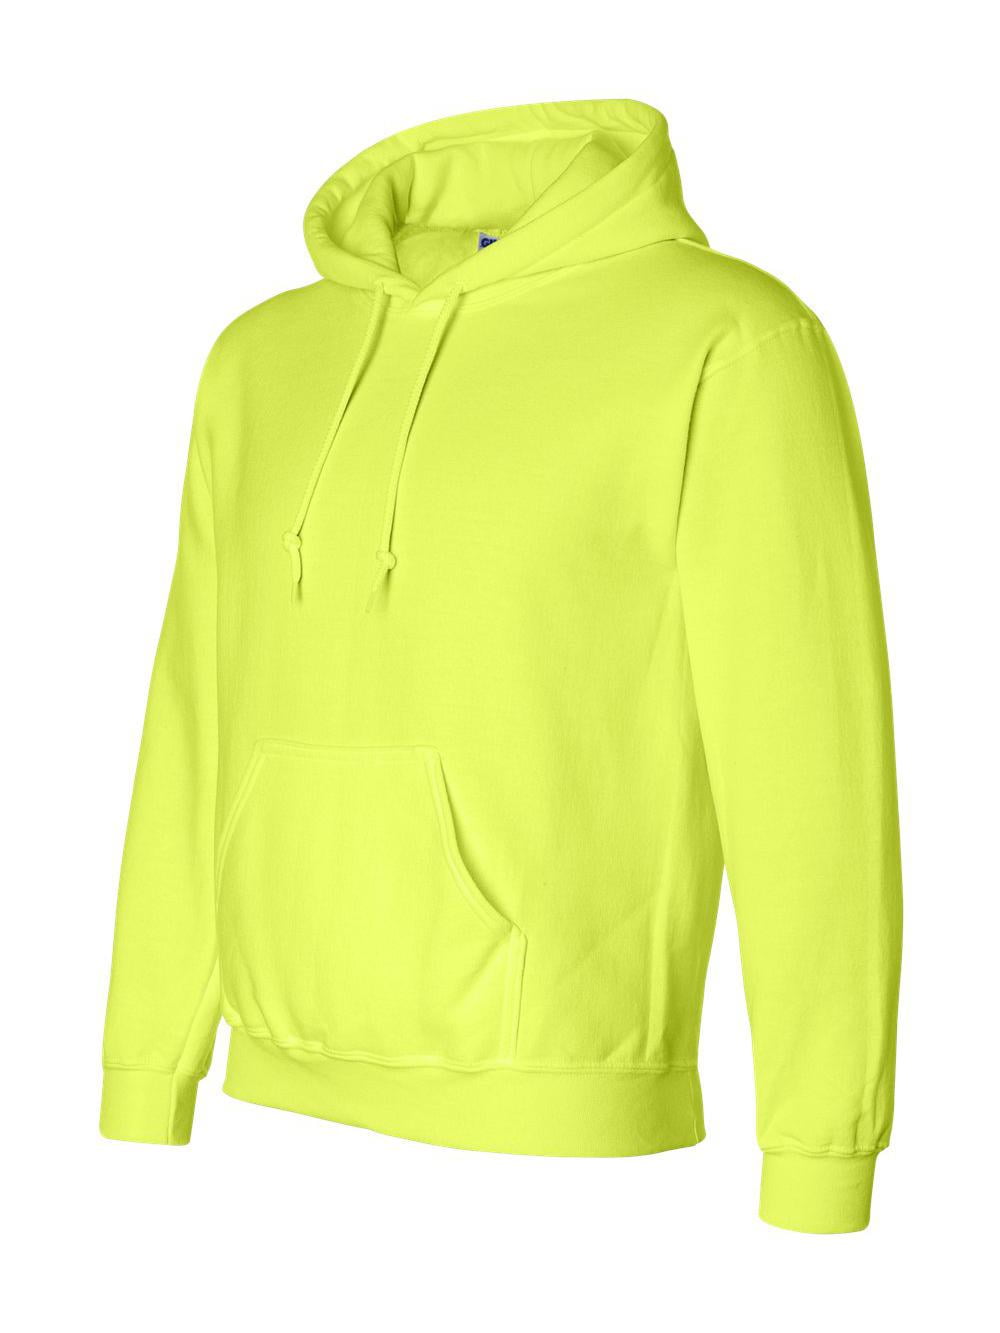 Gildan - DryBlend Hooded Sweatshirt - 12500 - Safety Green - Size: L ...